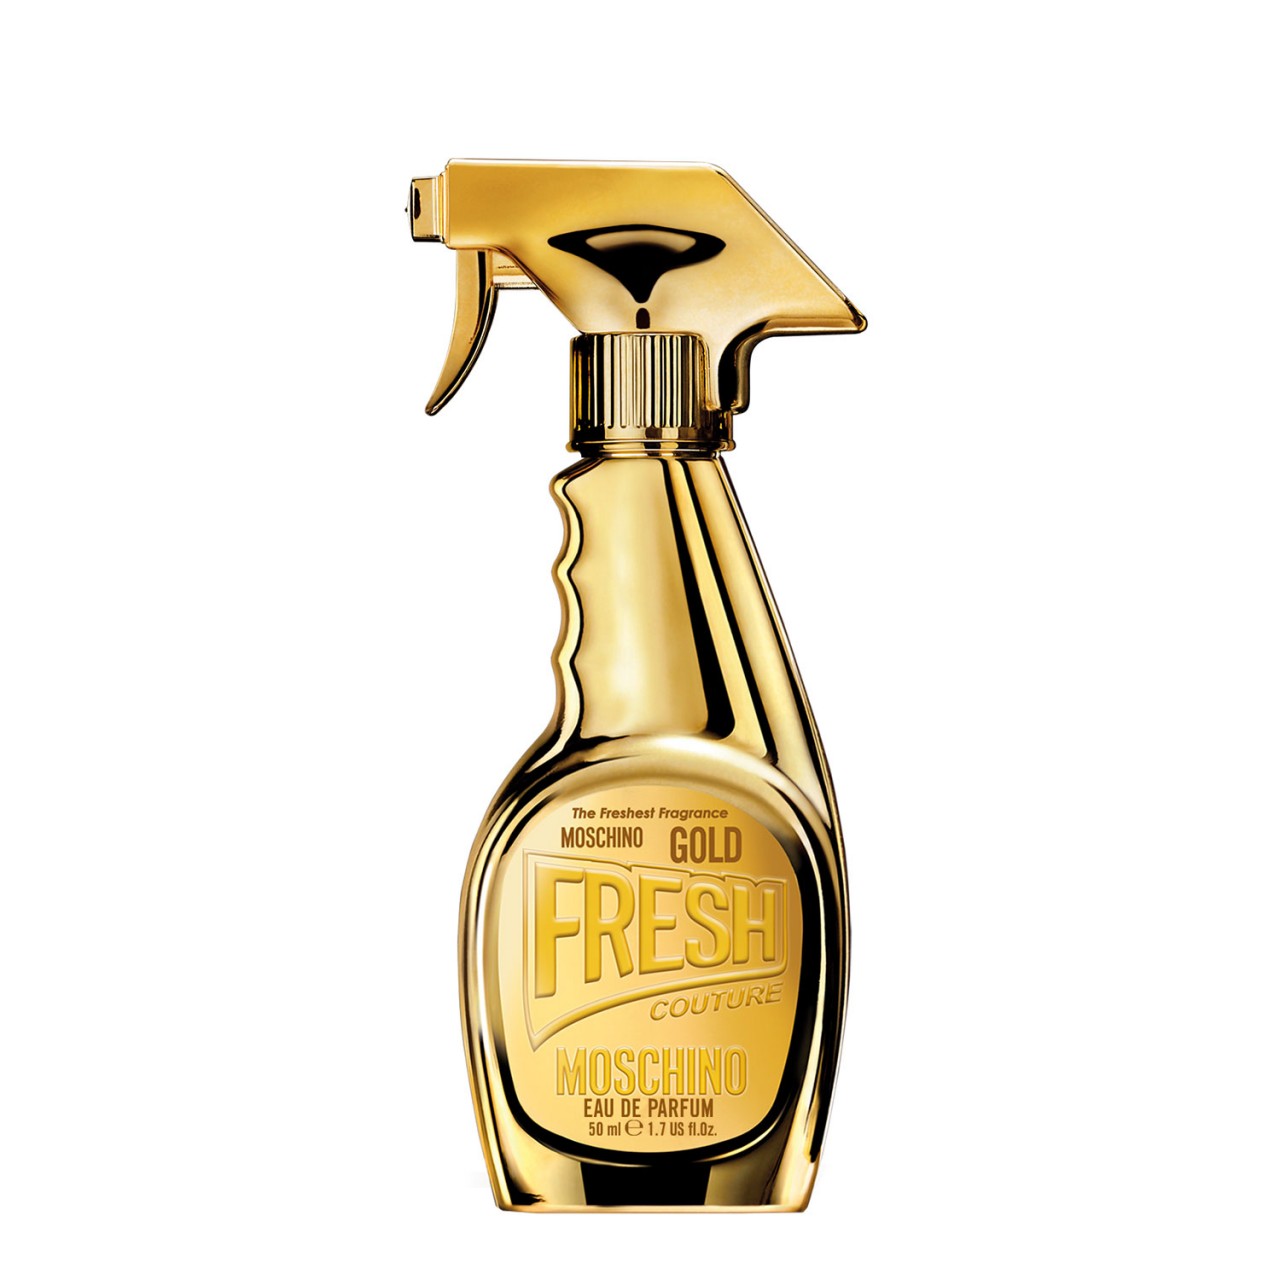 Gold Fresh Couture - Eau de Parfum von Moschino